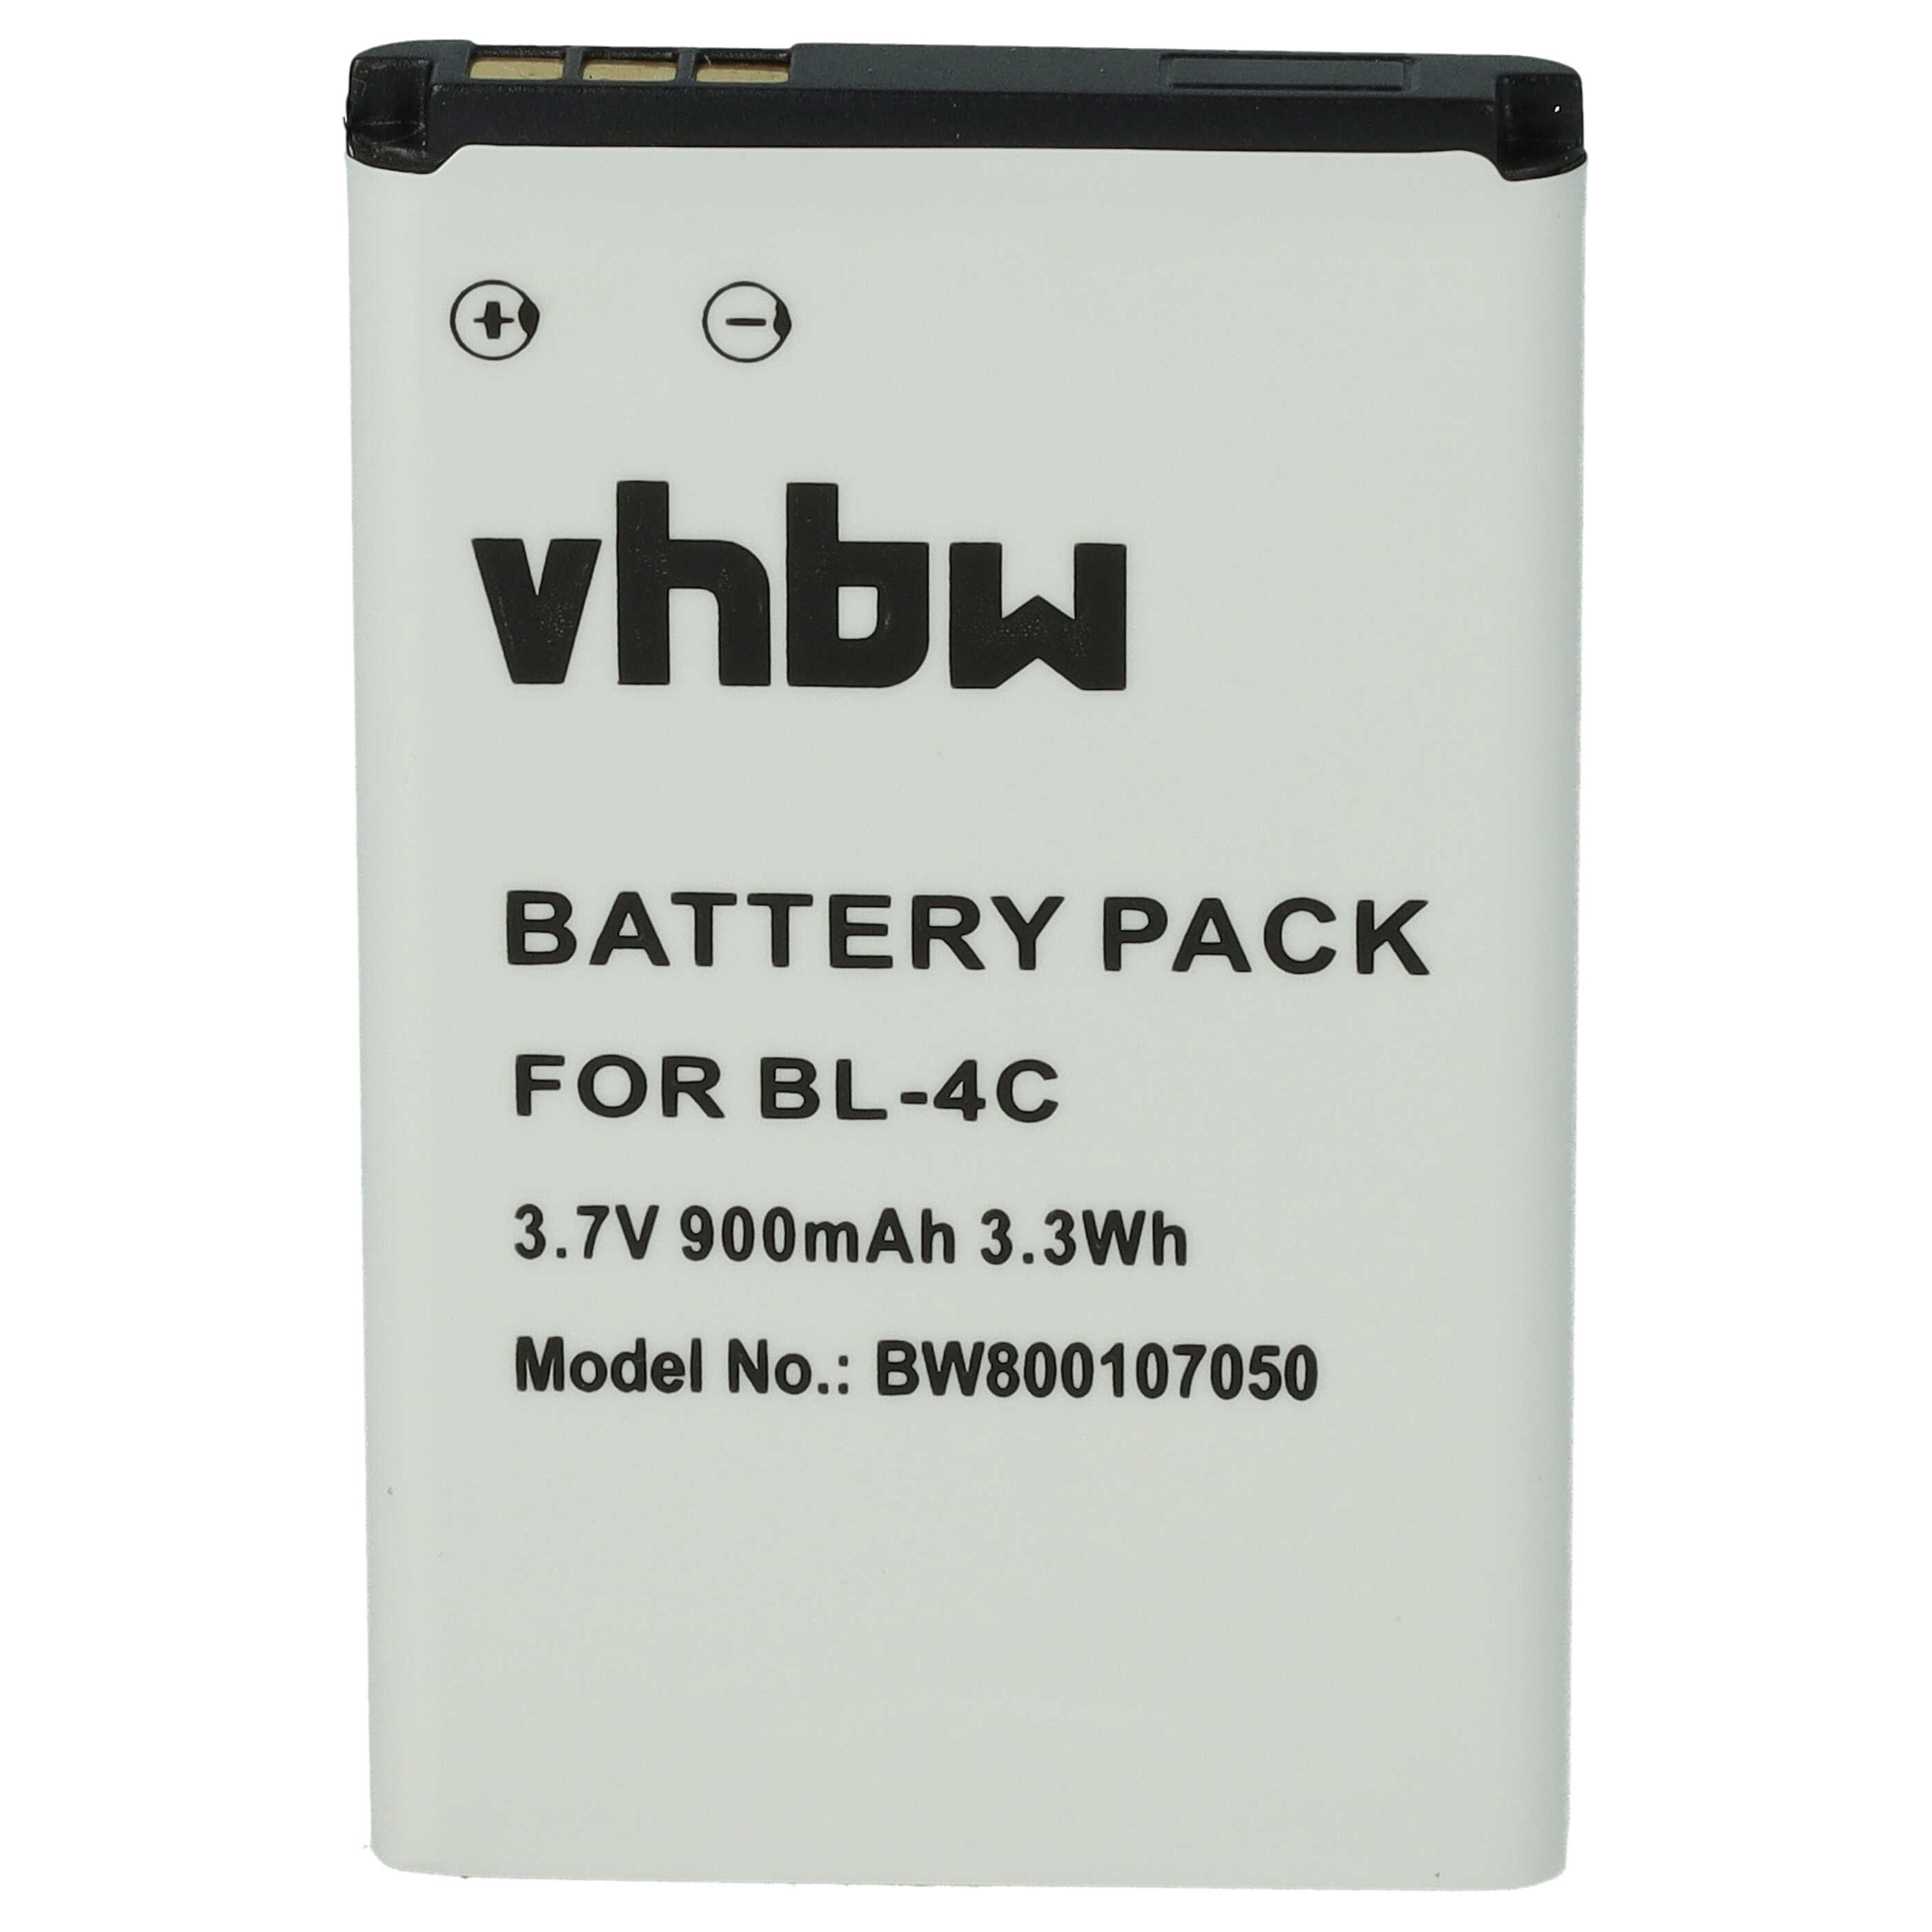 Landline Phone Battery Replacement for Snom 00001595, 02-109457, 60020438 - 900mAh 3.7V Li-Ion